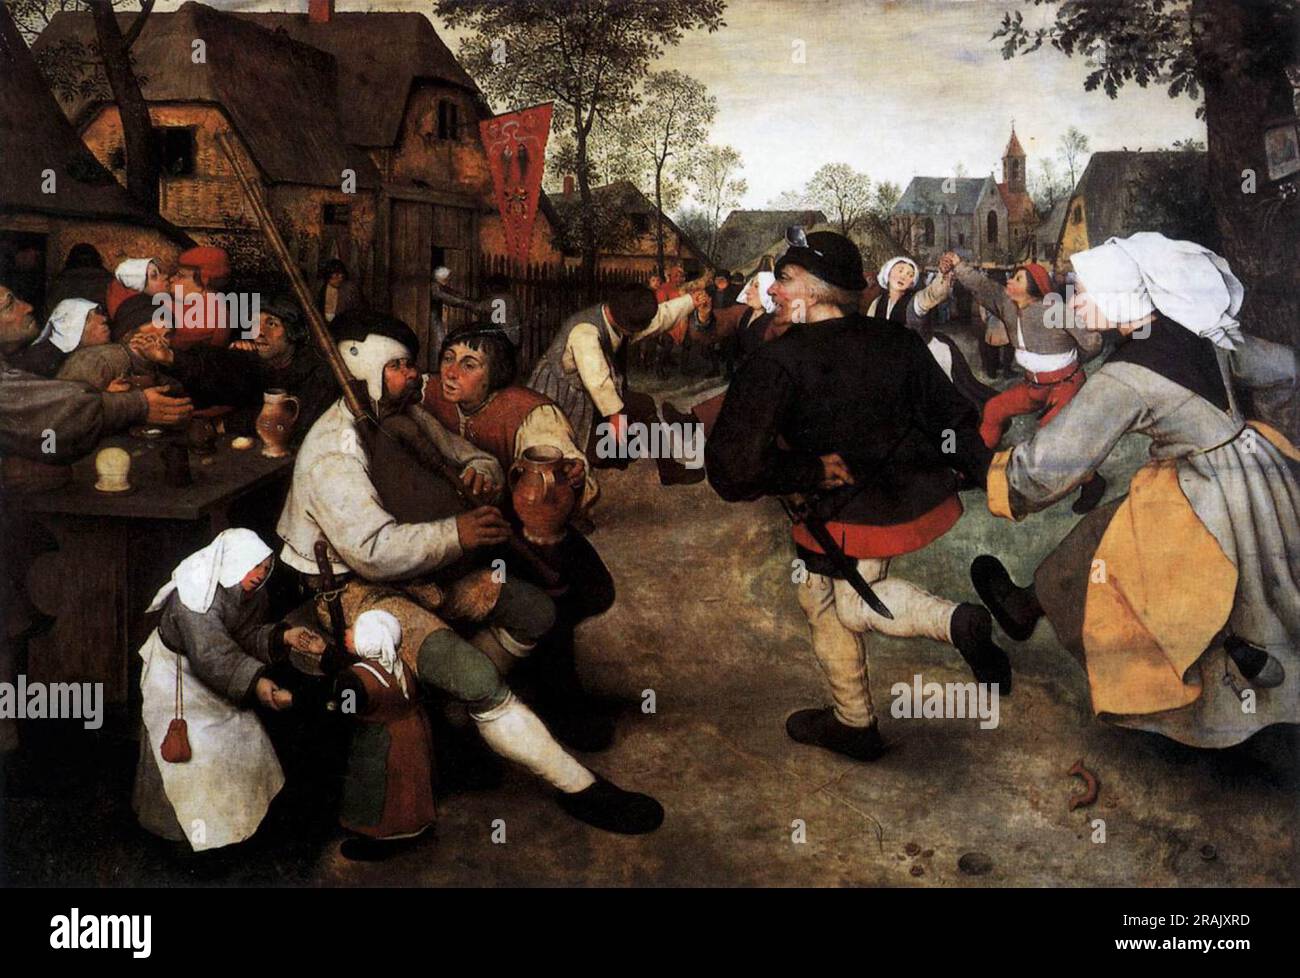 The Peasant Dance 1568; Brussels, Belgium by Pieter Bruegel the Elder Stock Photo